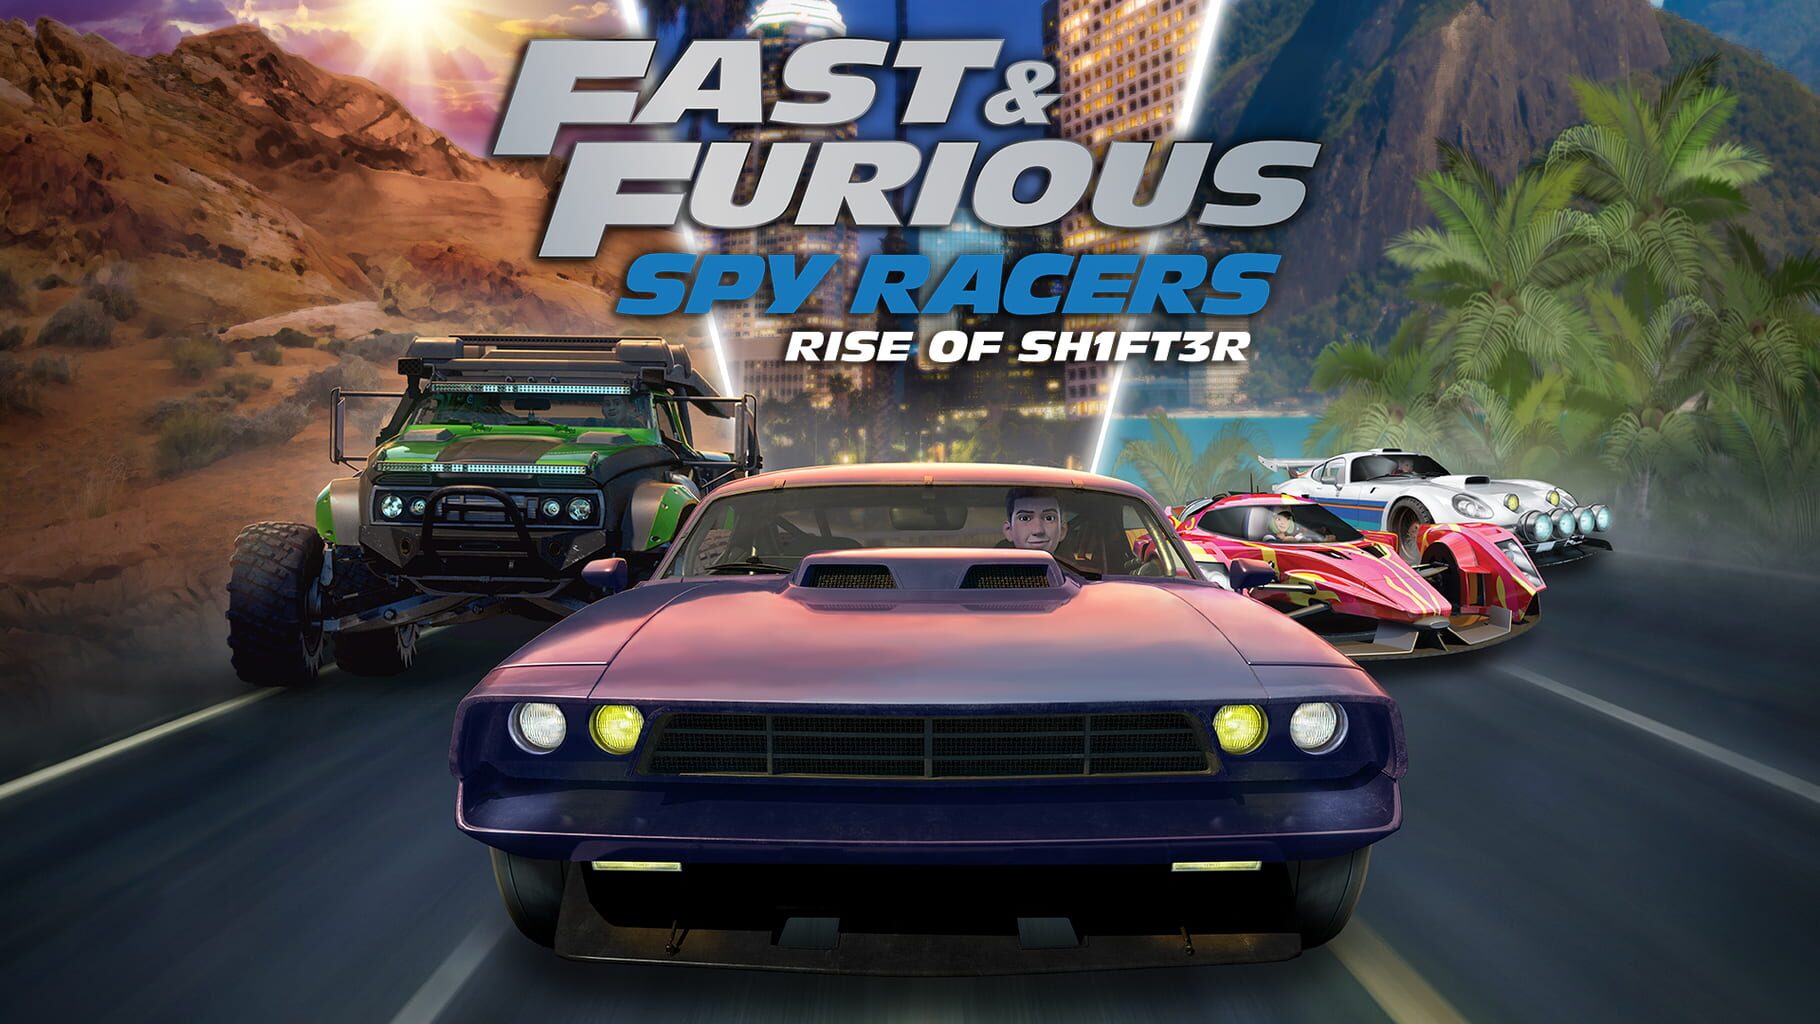 Arte - Fast & Furious: Spy Racers Rise of Sh1ft3r